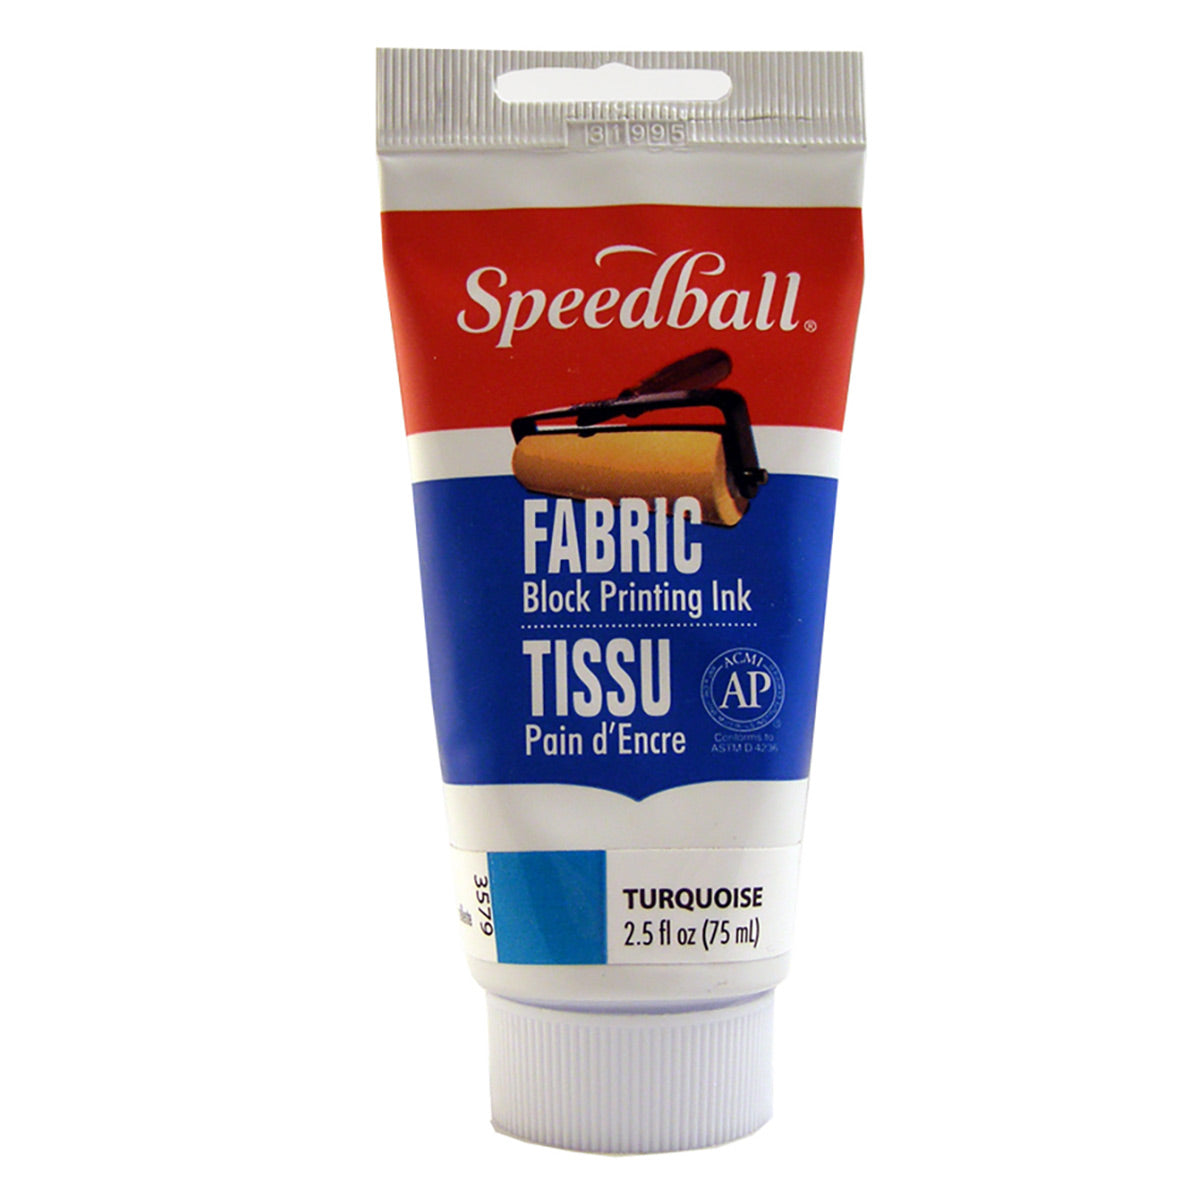 Speedball - Fabric Block Printing Ink 75ml (2,5 oz) - Turquoise